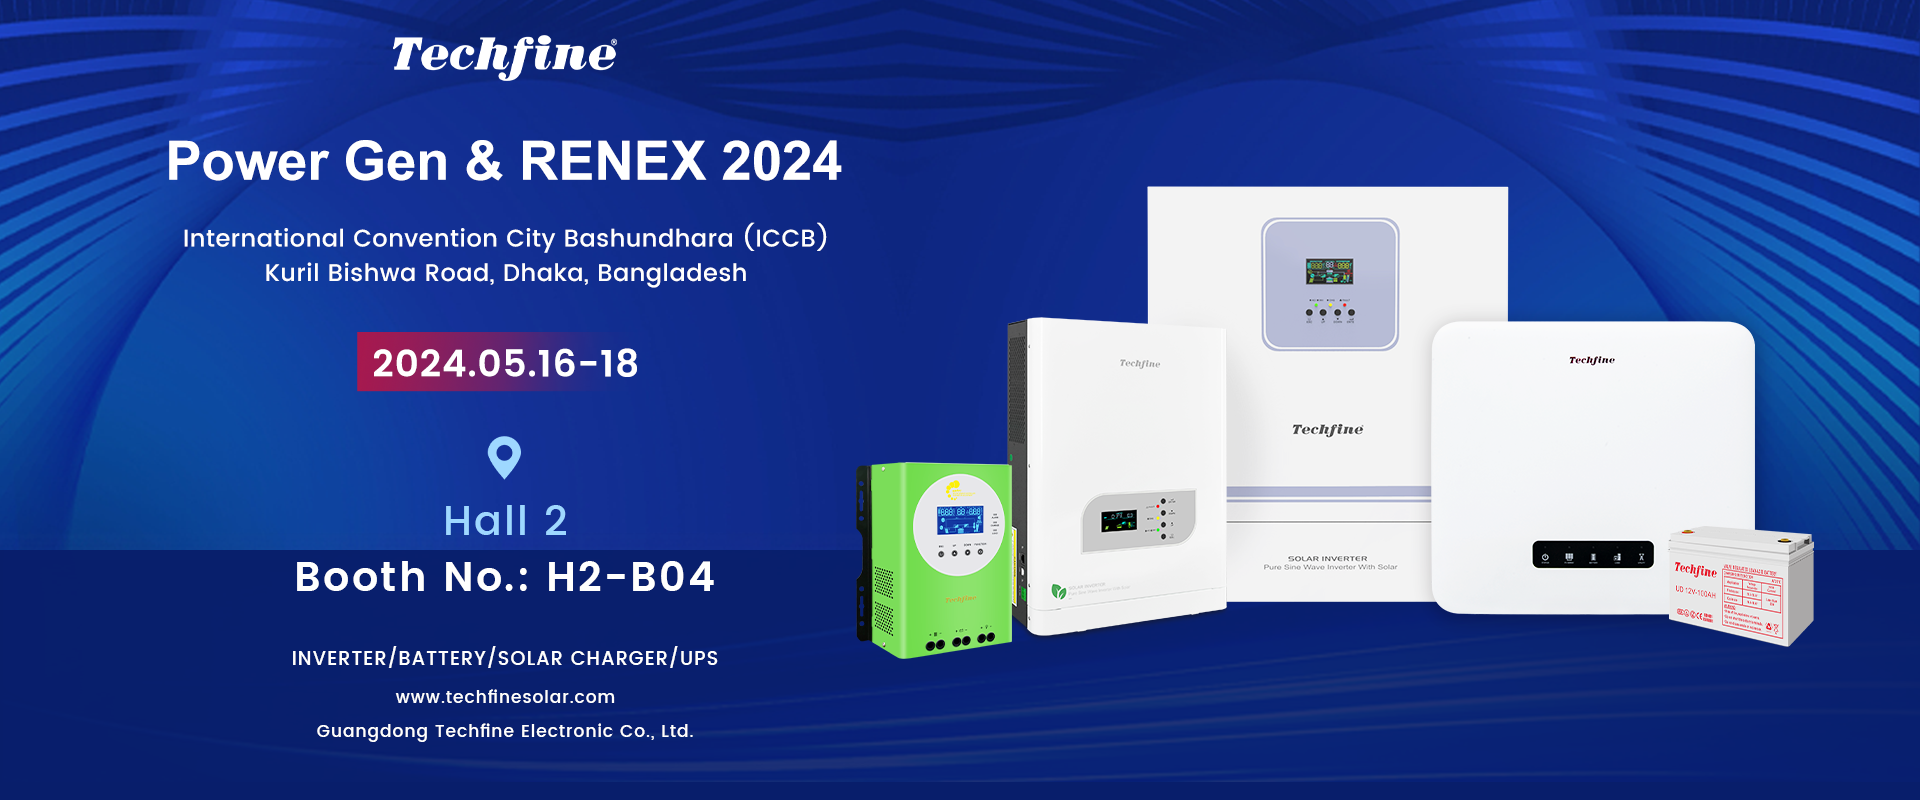 Power Gen & RENEX 2024 1920x800px